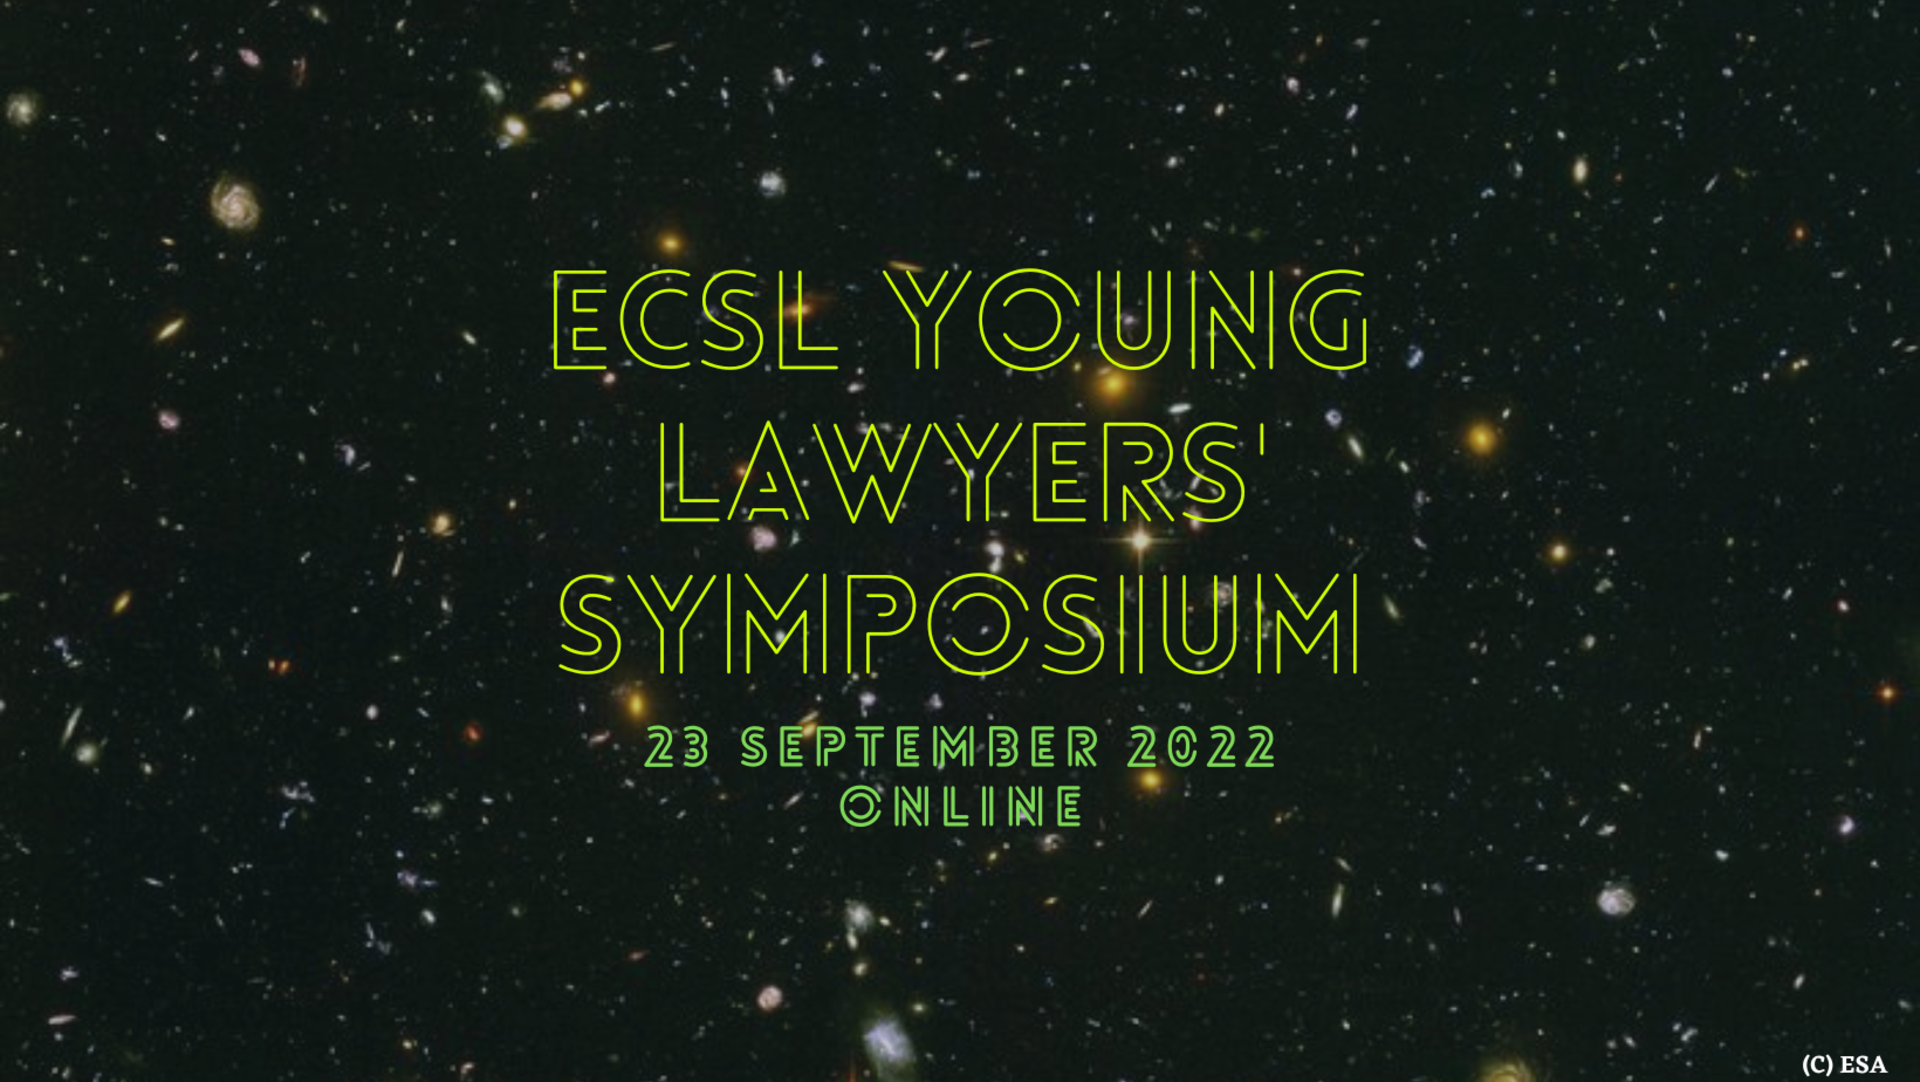 ECSL Young Lawyers' Symposium 2022